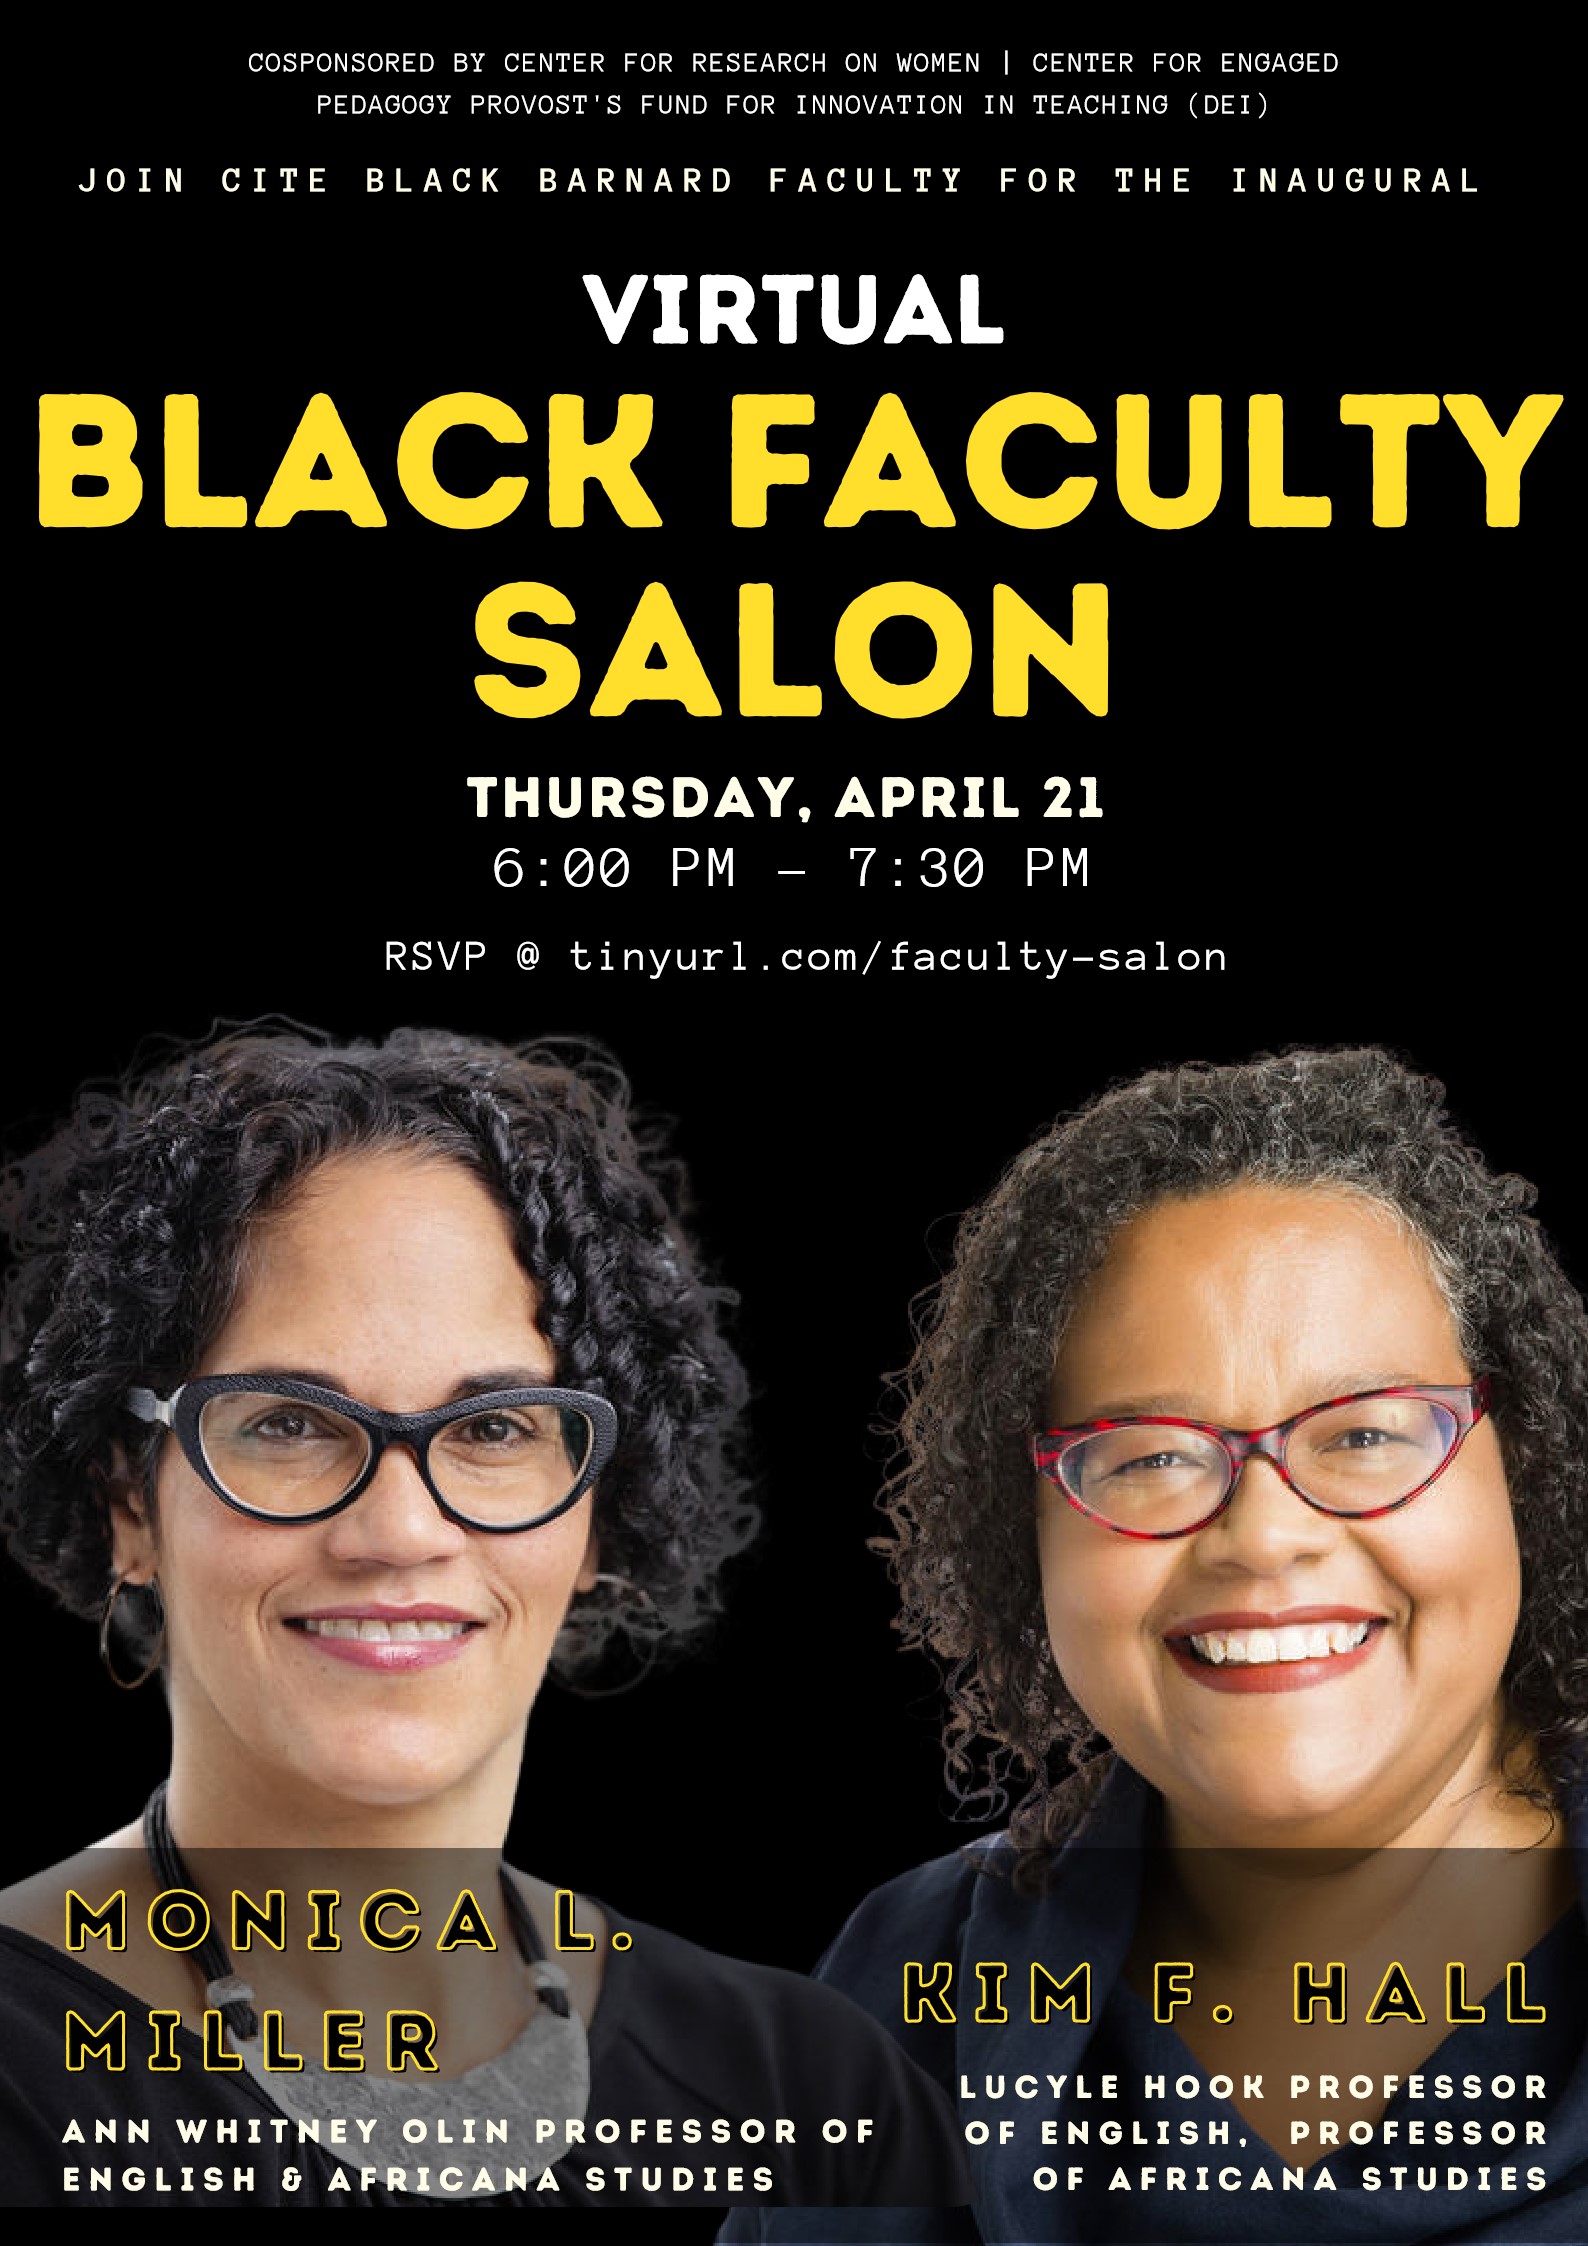 Cite Black Barnard Faculty poster